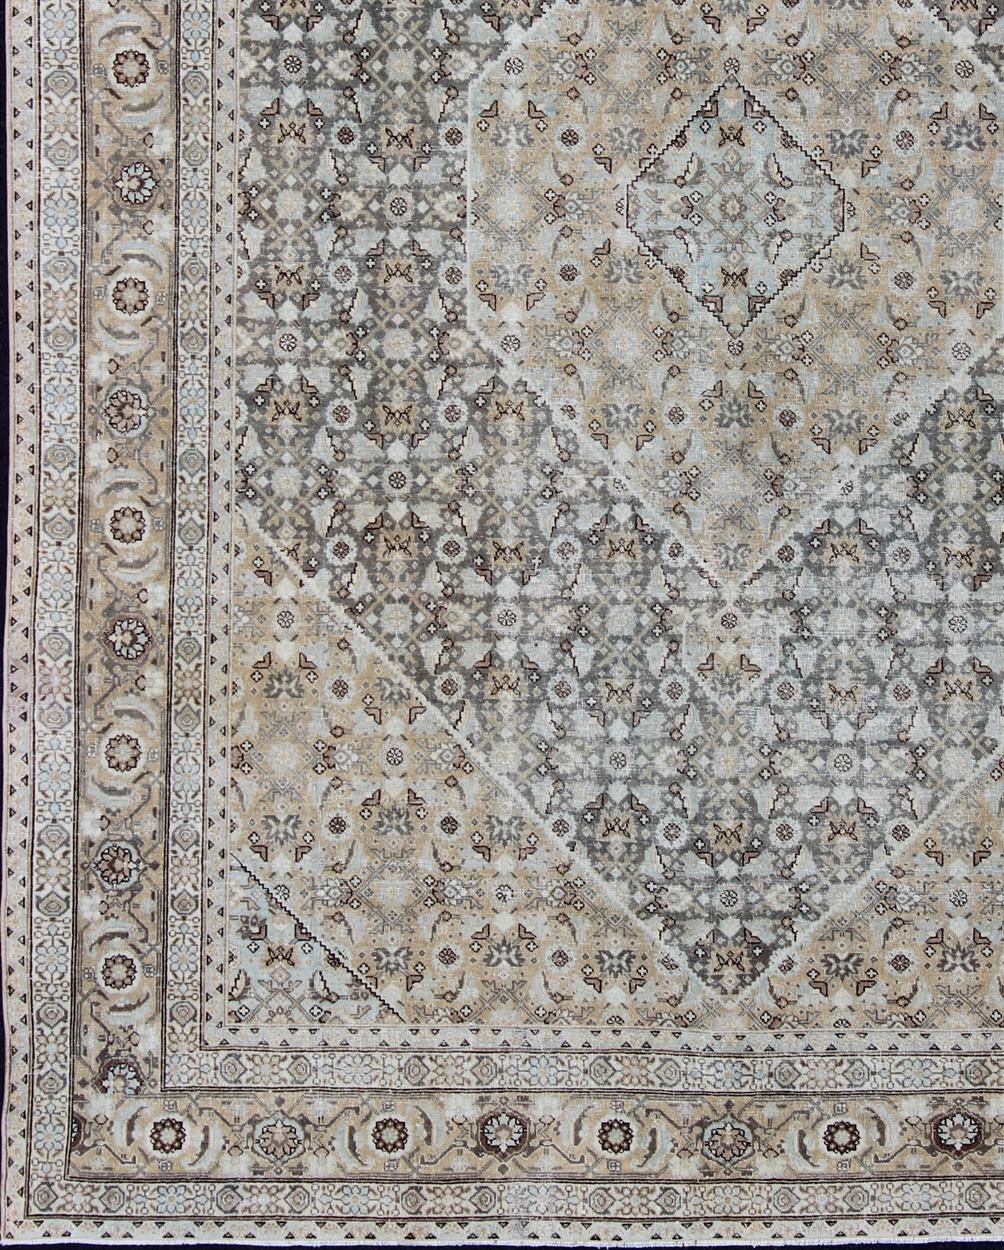 Antique Persian Tabriz Carpet With Geometric Diamond Design in Light Tones, Gray green, Gray, taupe, light blue, tan and brown Geometric Persian Tabriz rug, Keivan Woven Arts/ rug/ SUS-1908-369, country of origin / type: Iran / Tabriz, circa